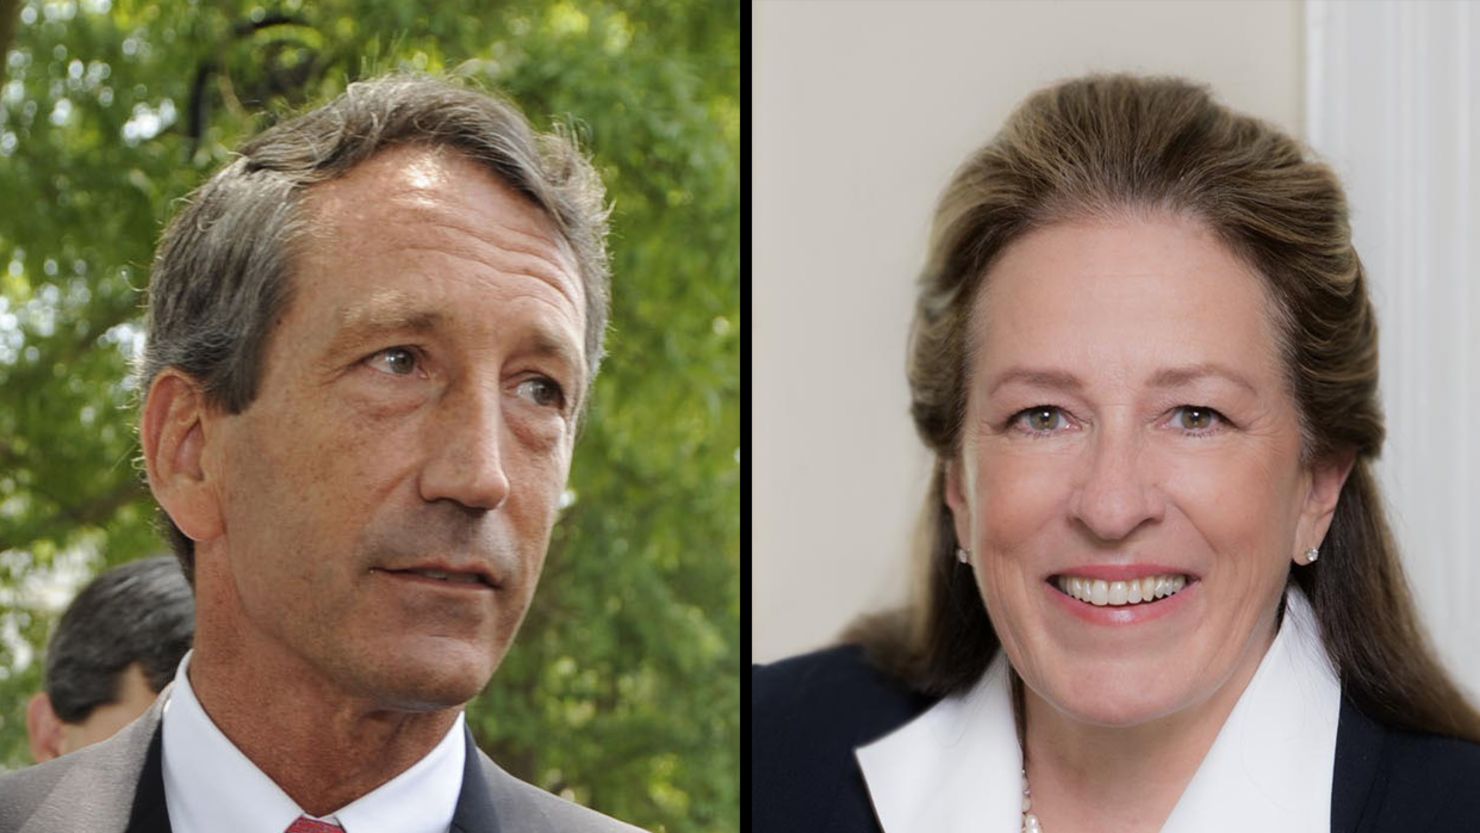 Former South Carolina Gov. Mark Sanford, left, and Elizabeth Colbert Busch, are running for Congress in the South Carolina.